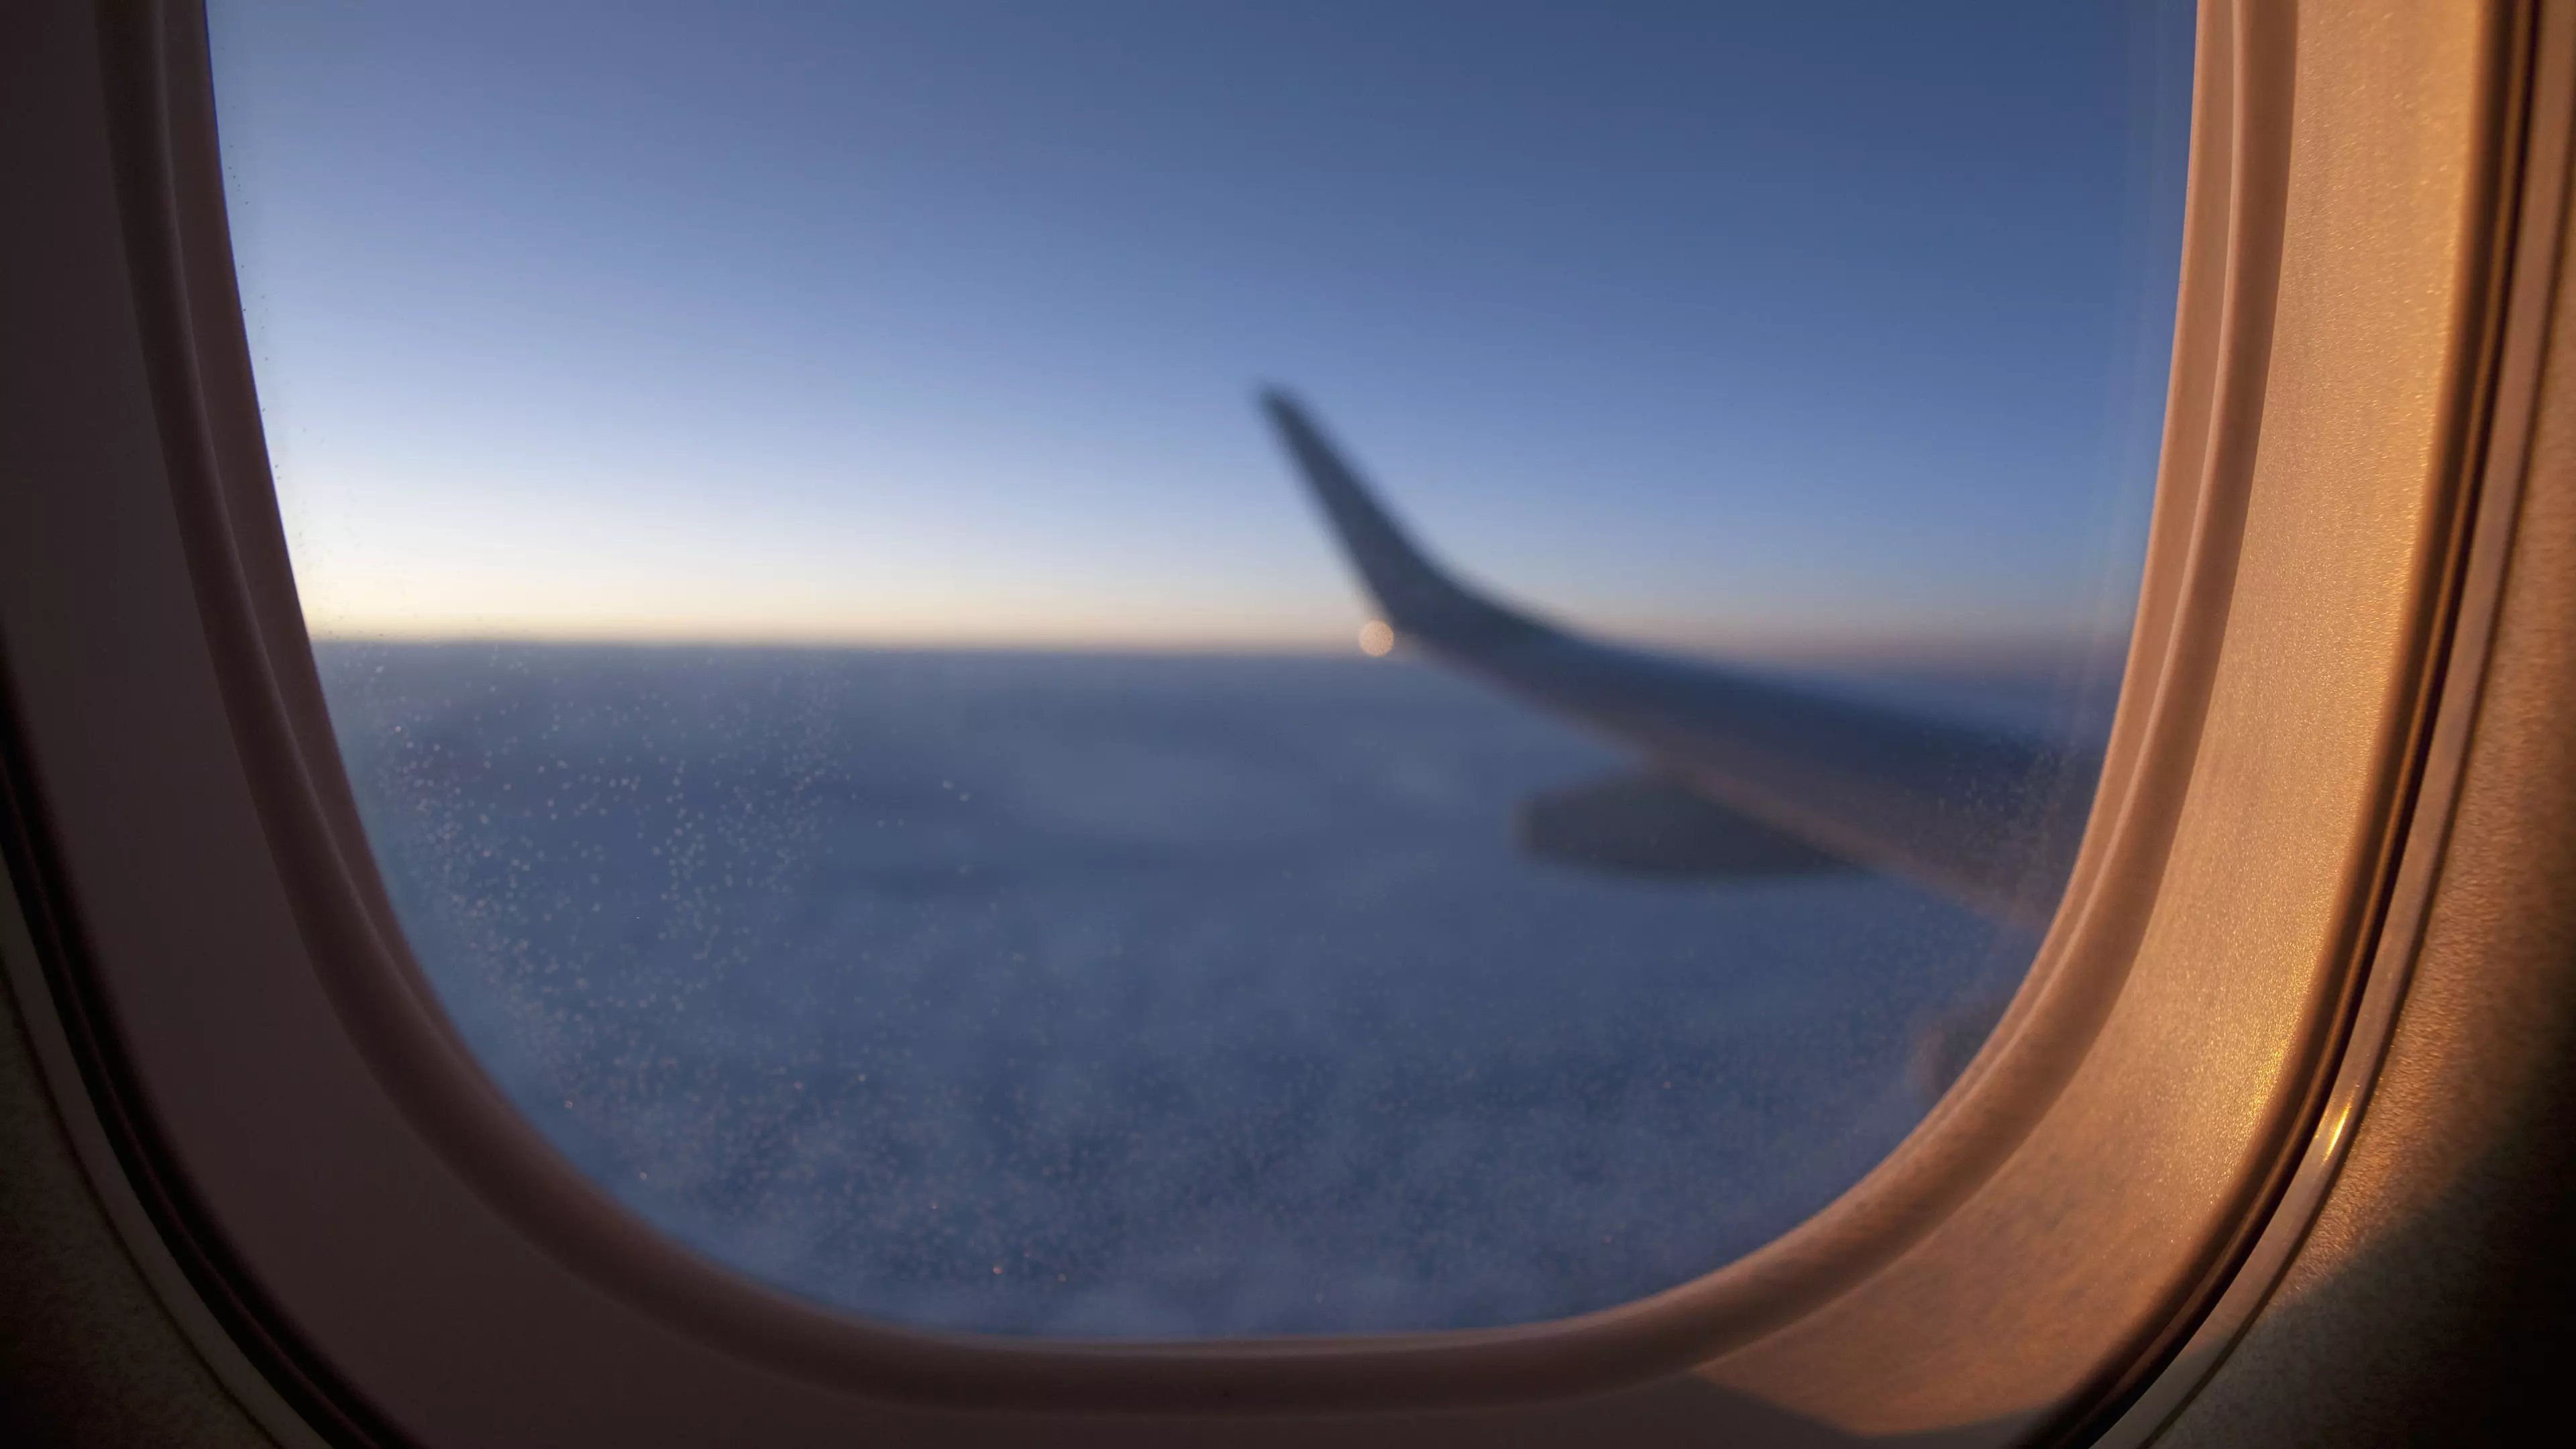 Flight Attendant Warns Passengers To Never Rest Their Head On Windows